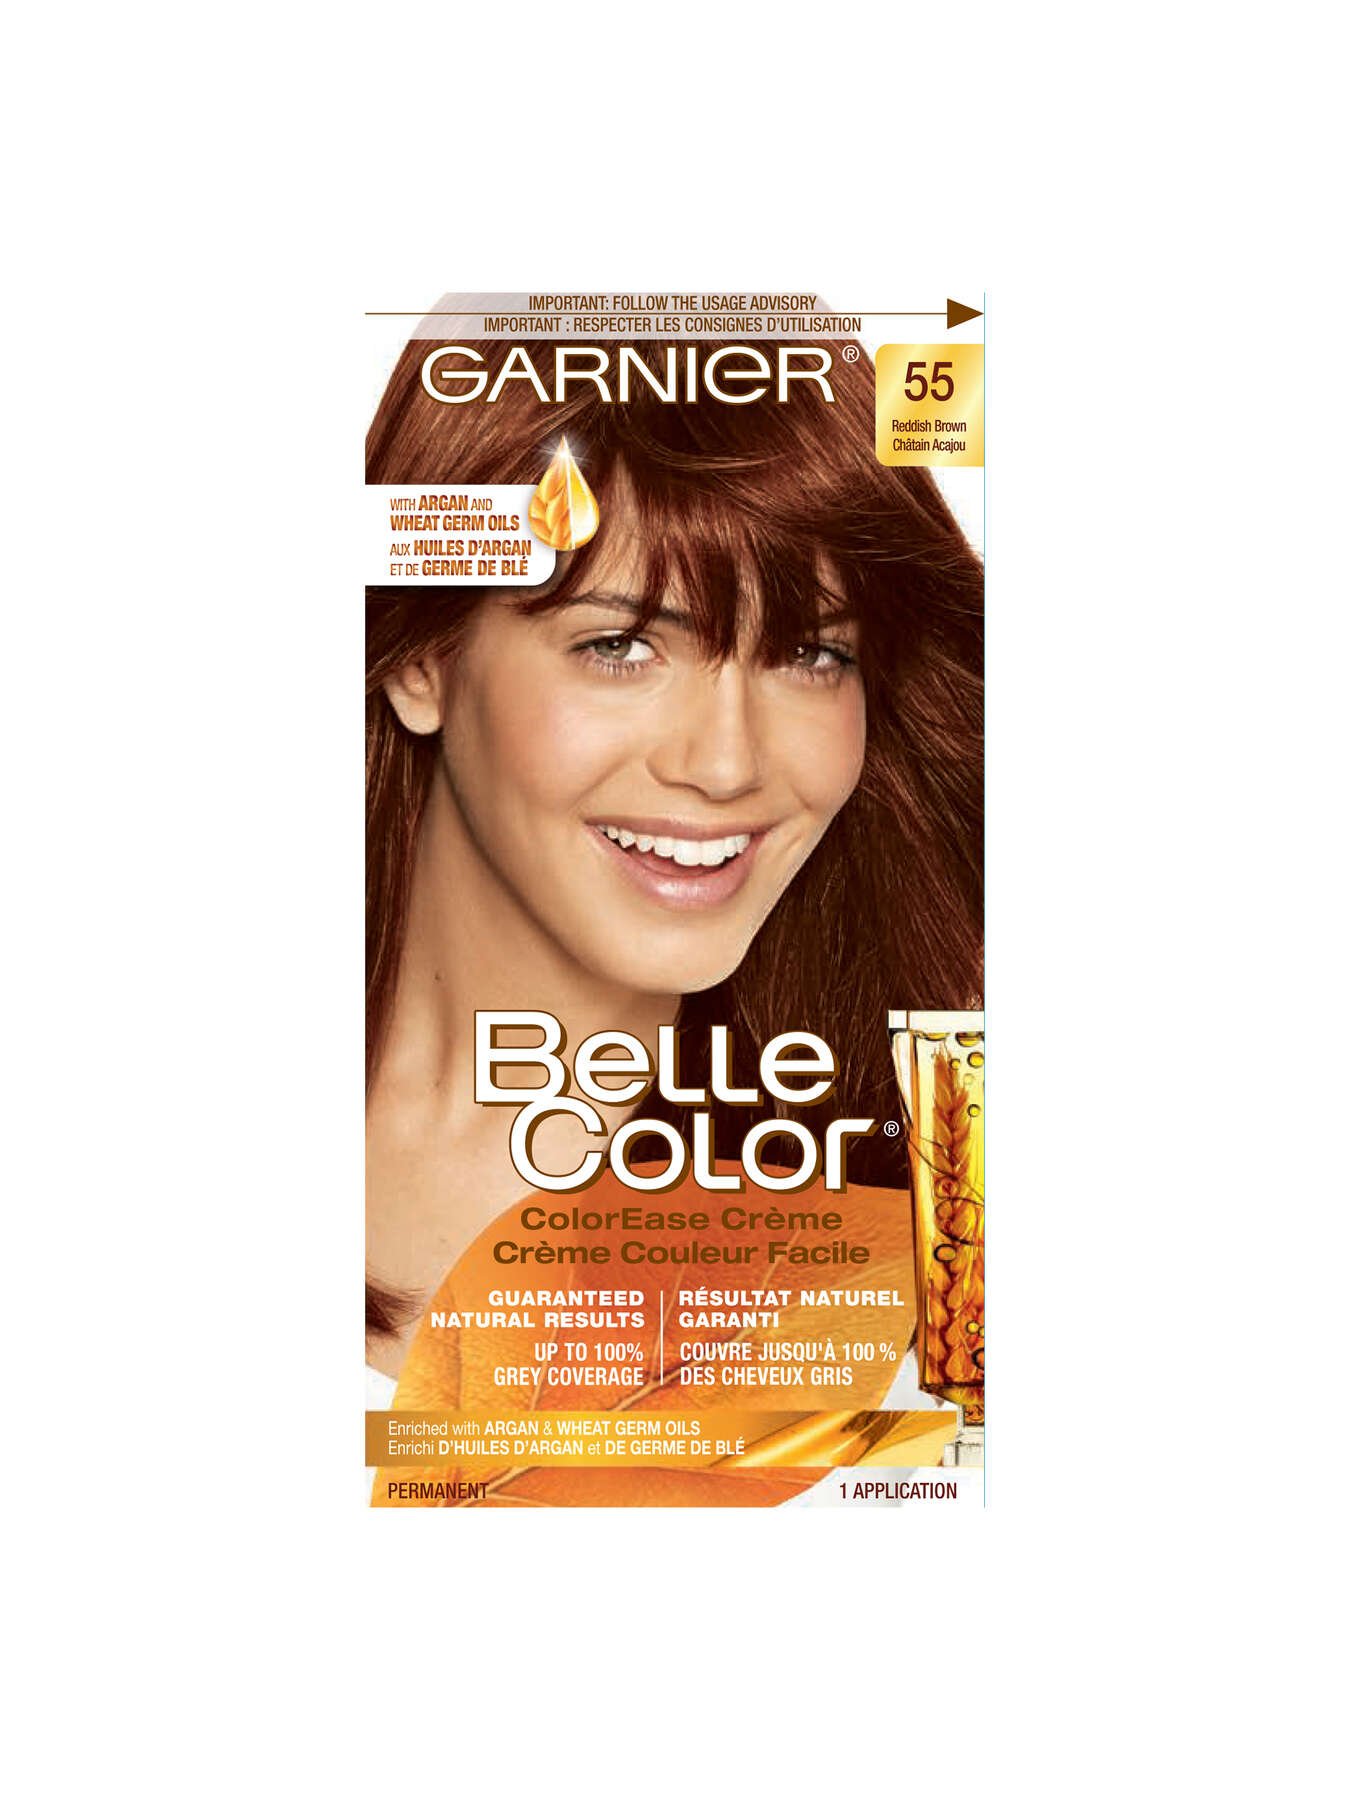 garnier hair dye belle color 55 reddish brown 70103160079 t1